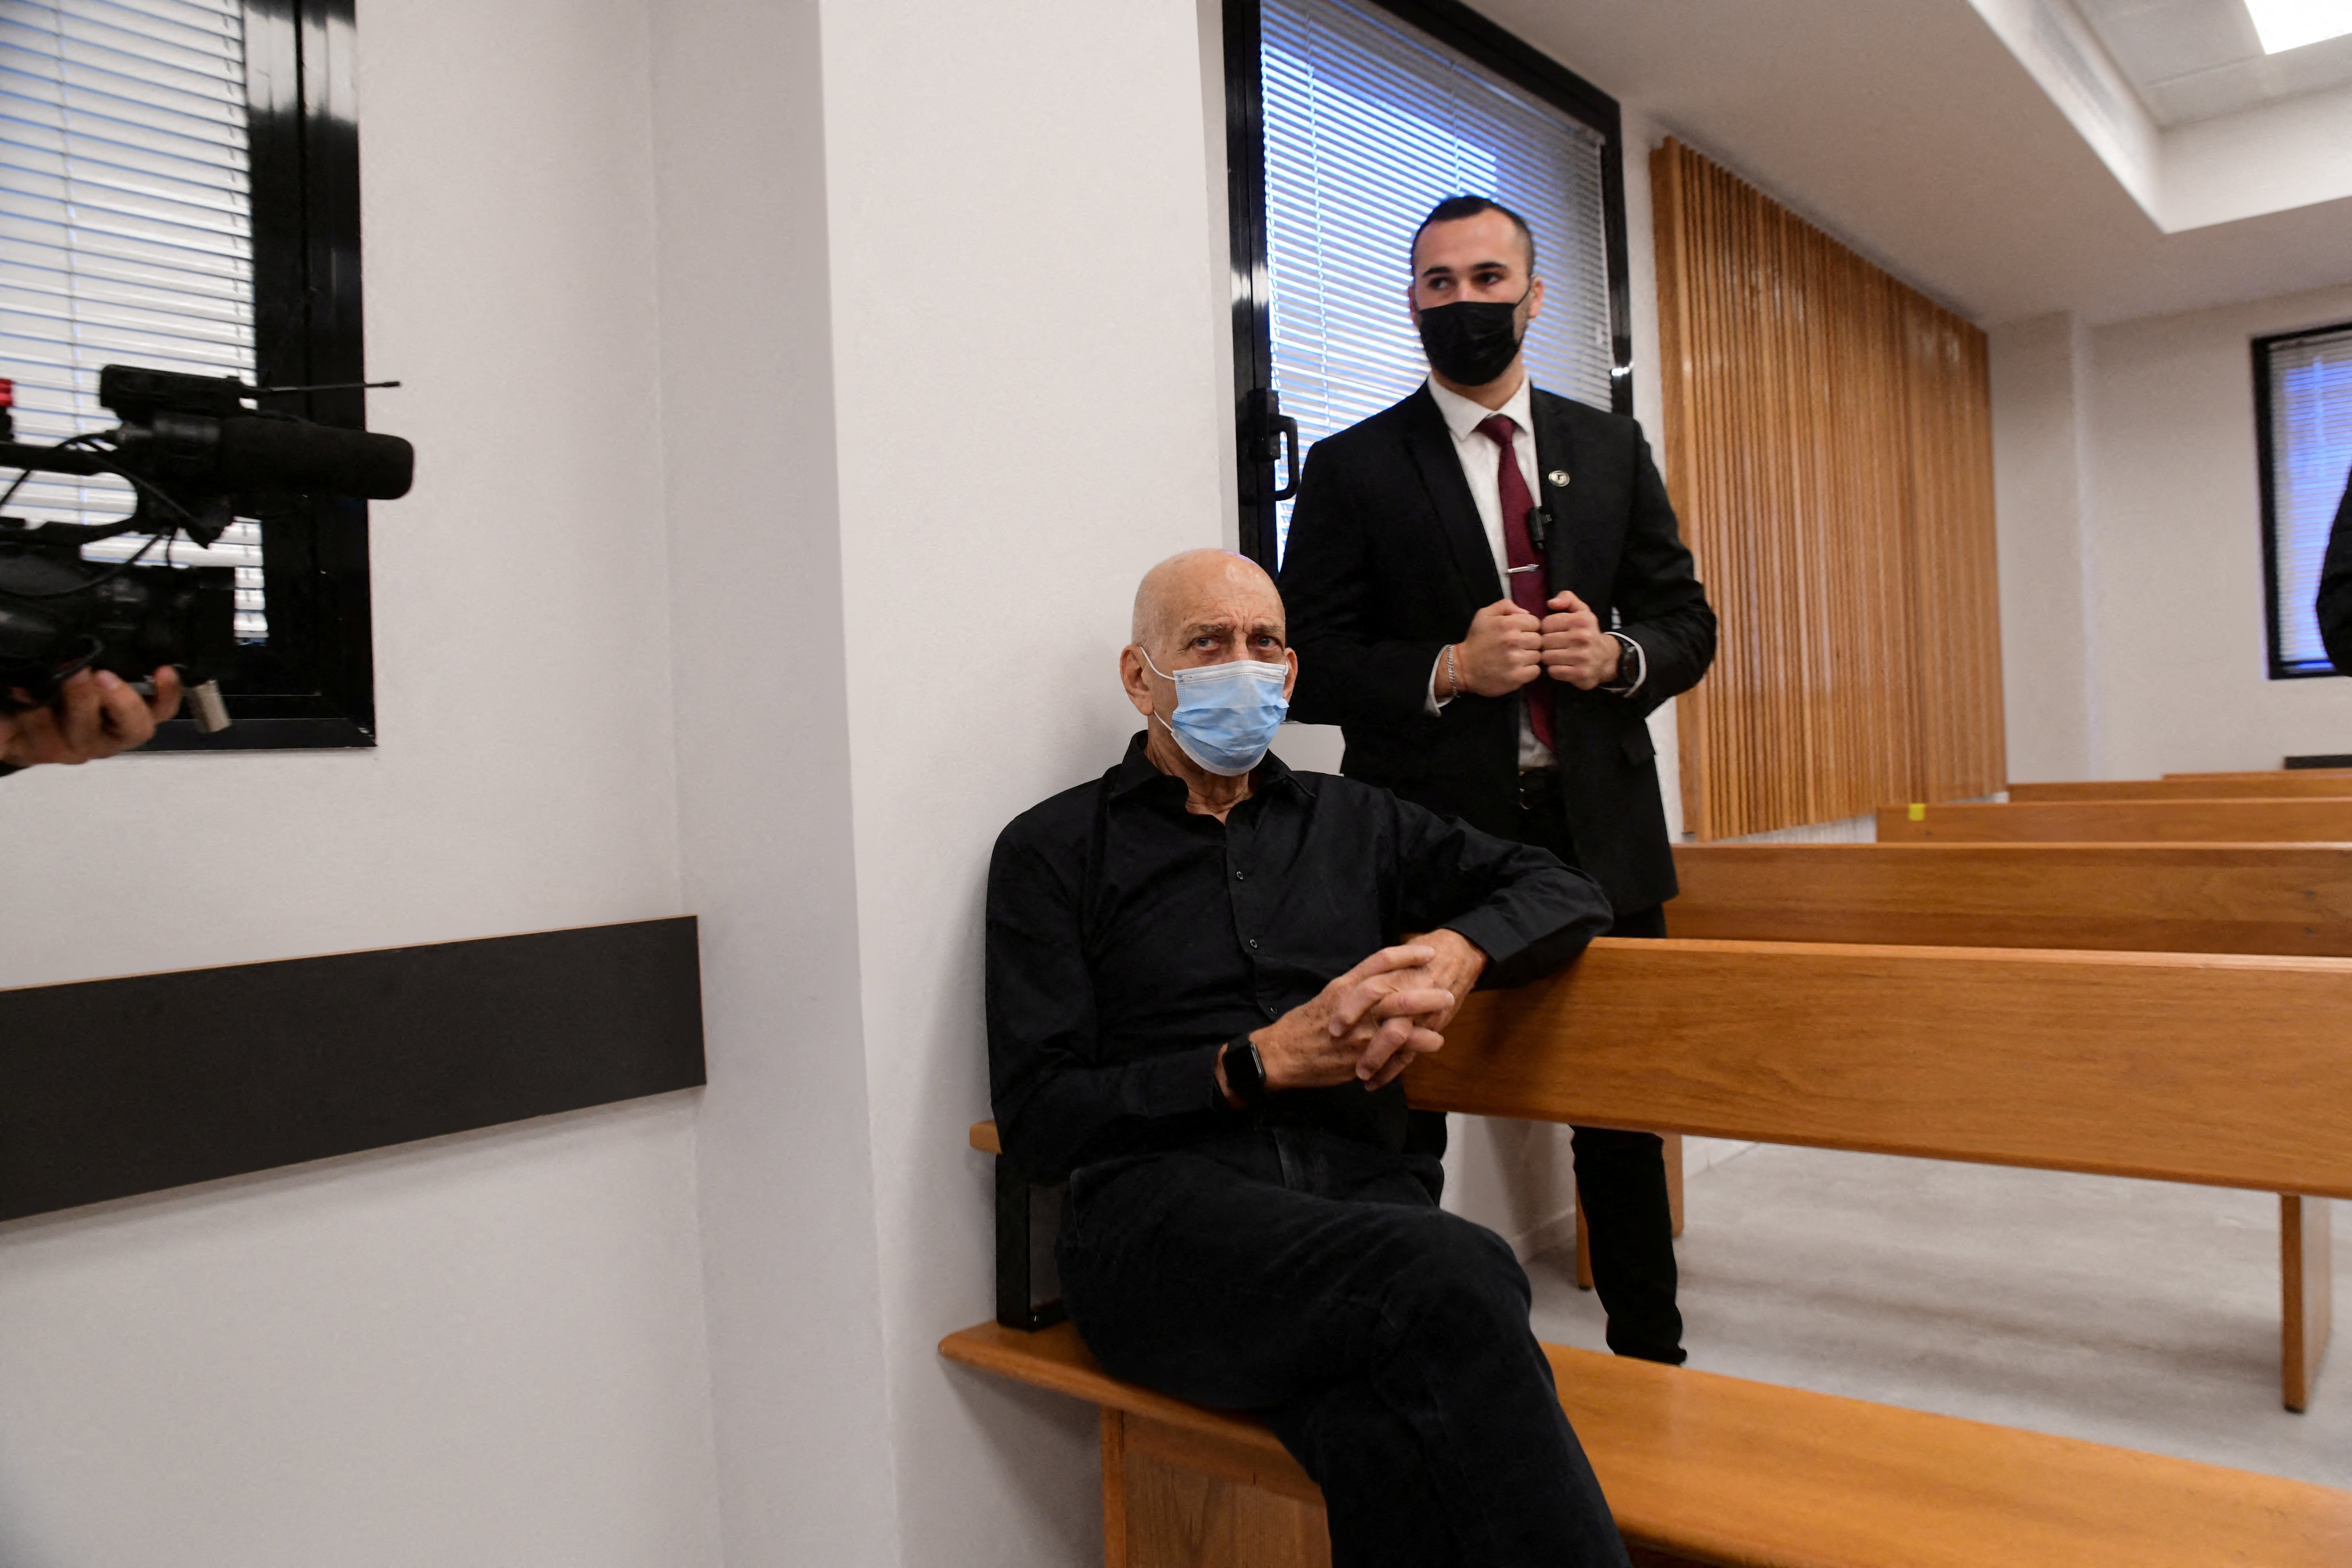 Preliminary hearing of the defamation lawsuit against Former Israeli Prime Minister Ehud Olmert filed by Benjamin Netanyahu